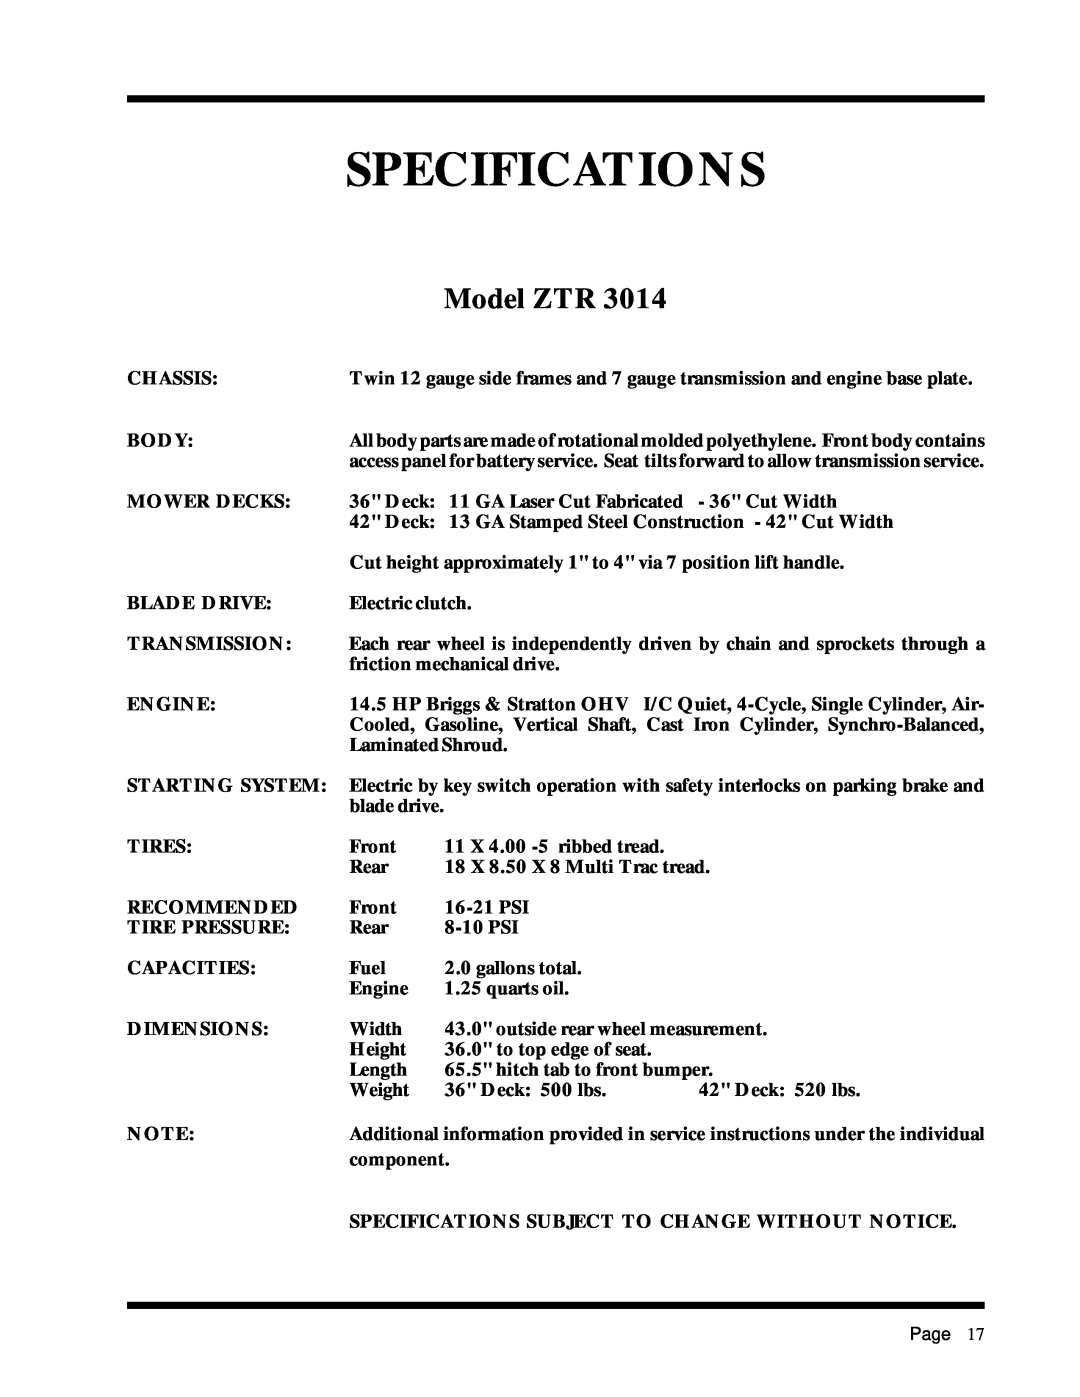 Dixon ZTR 2301 manual Specifications, Model ZTR, GA Laser Cut Fabricated 